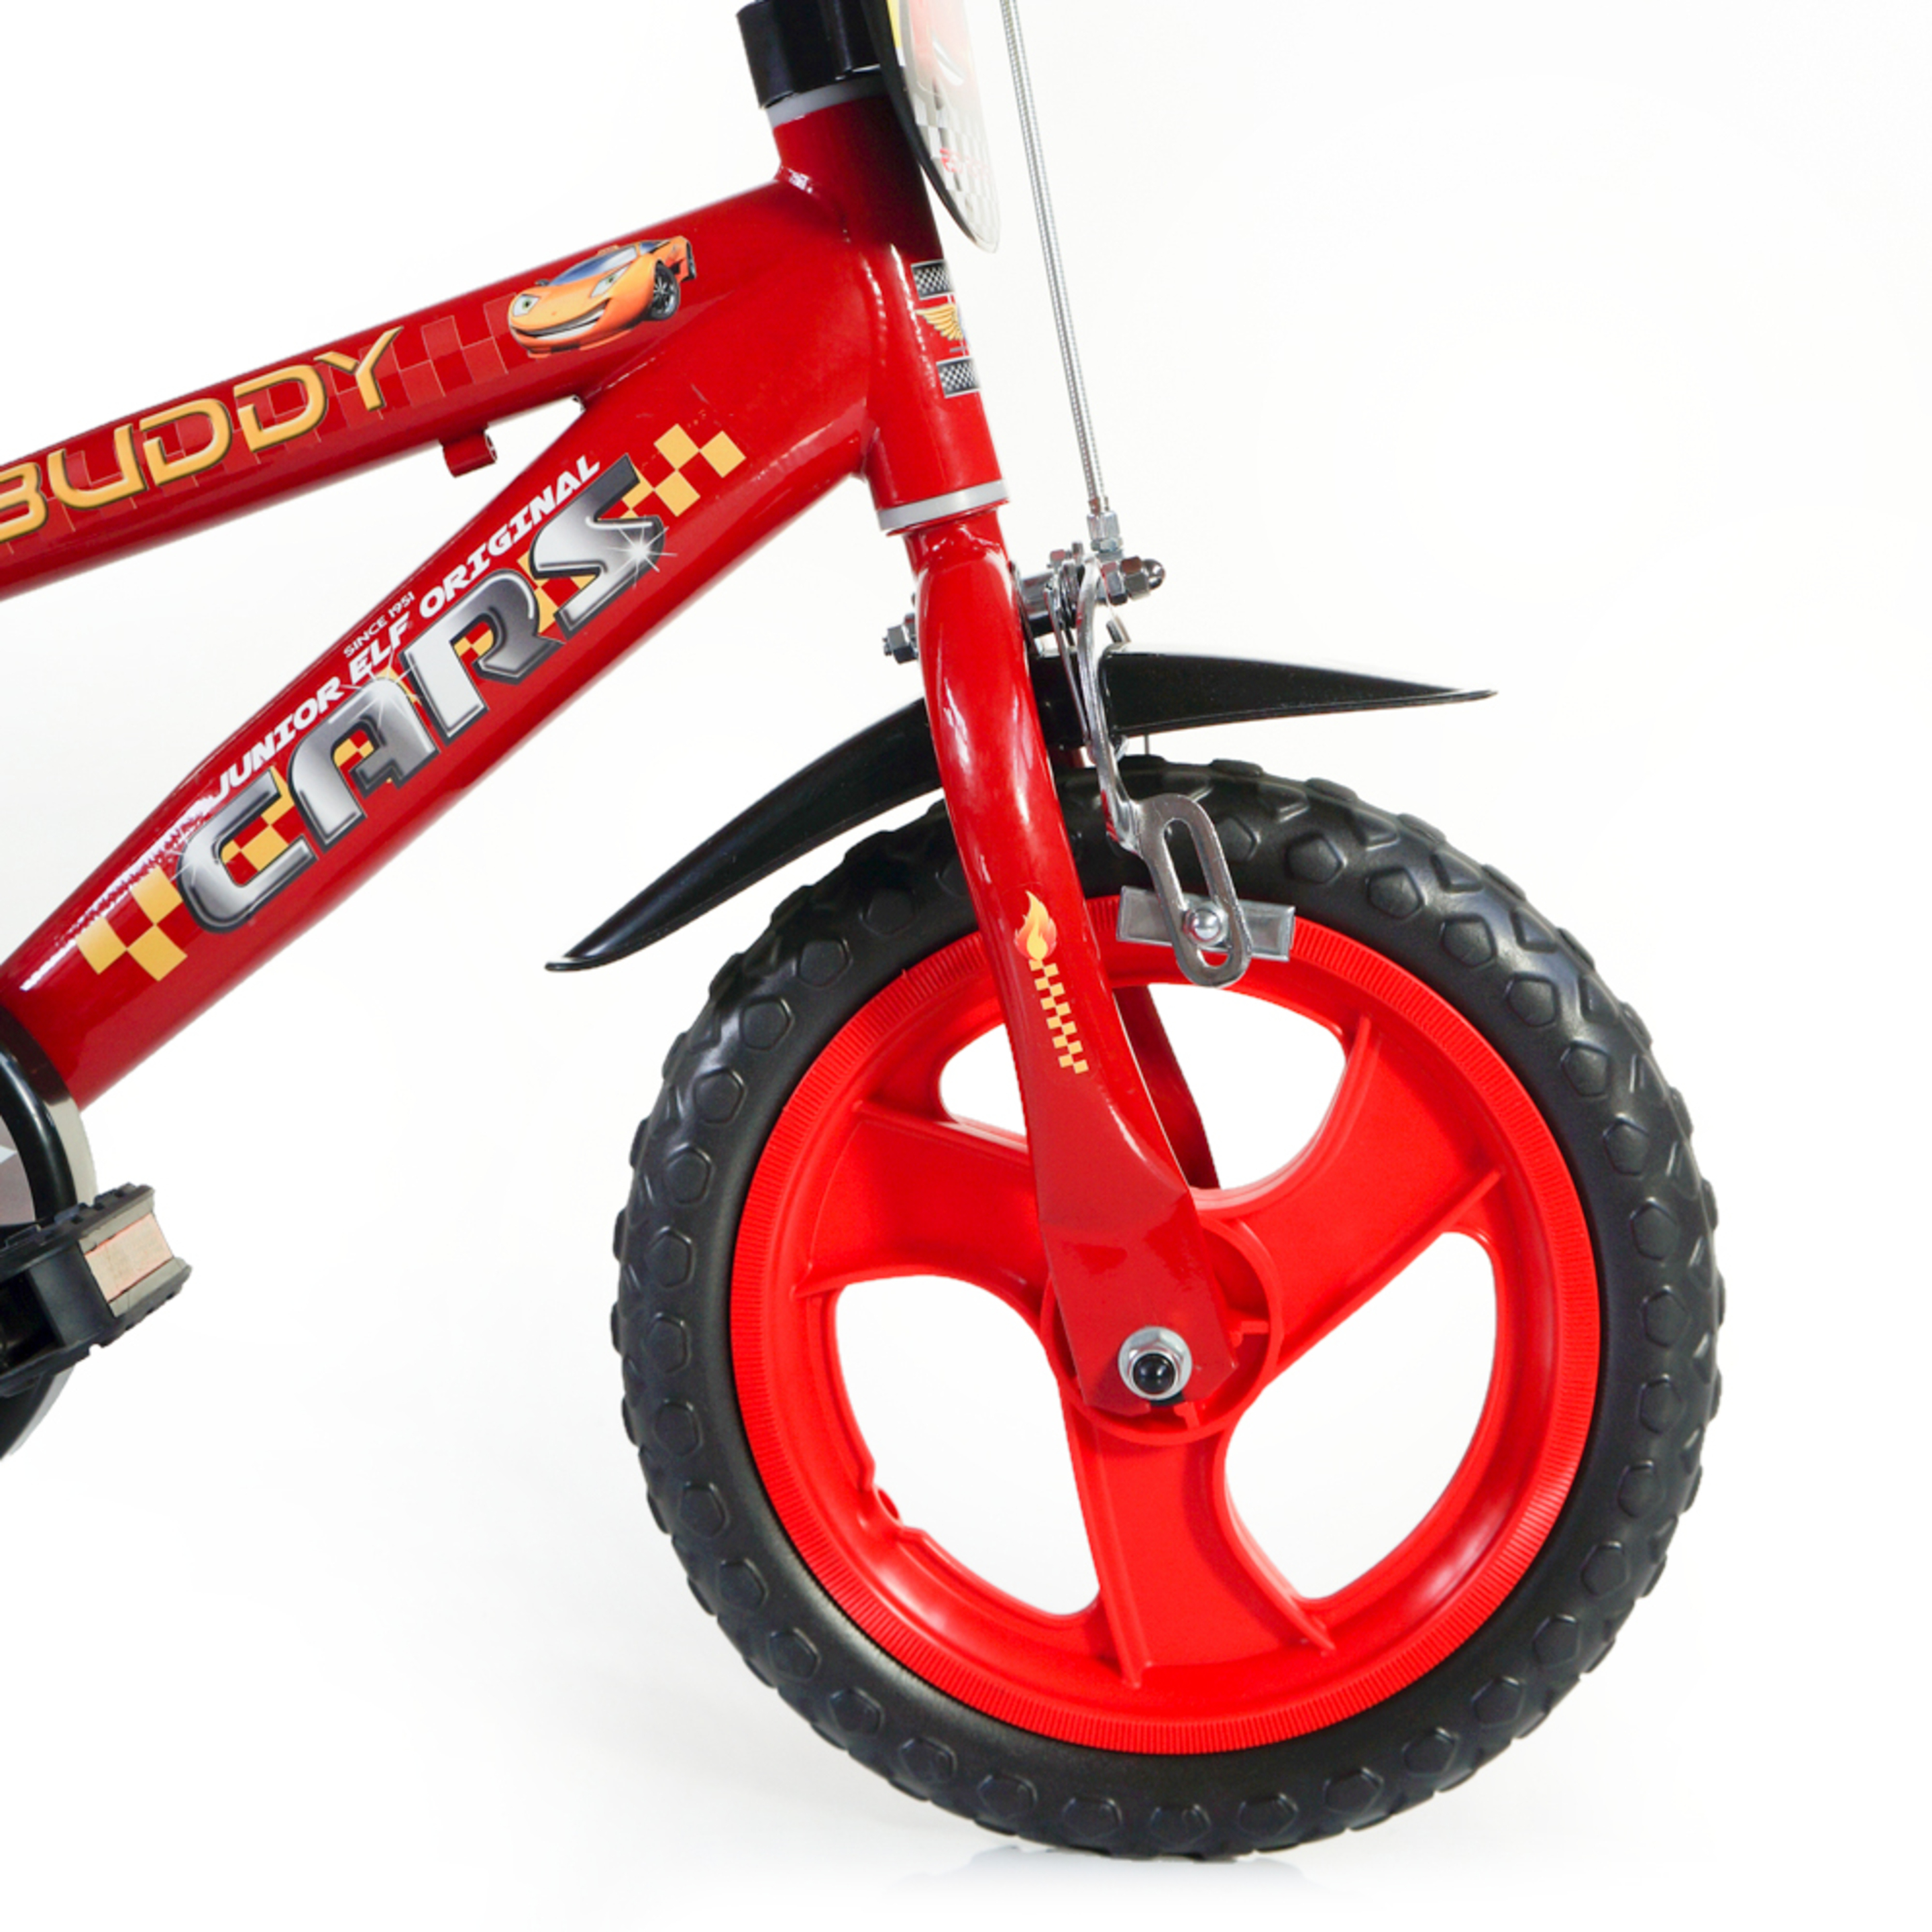 Bicicleta Niño 12 Pulgadas Buddy Cars 3-5 Años - Rojo  MKP